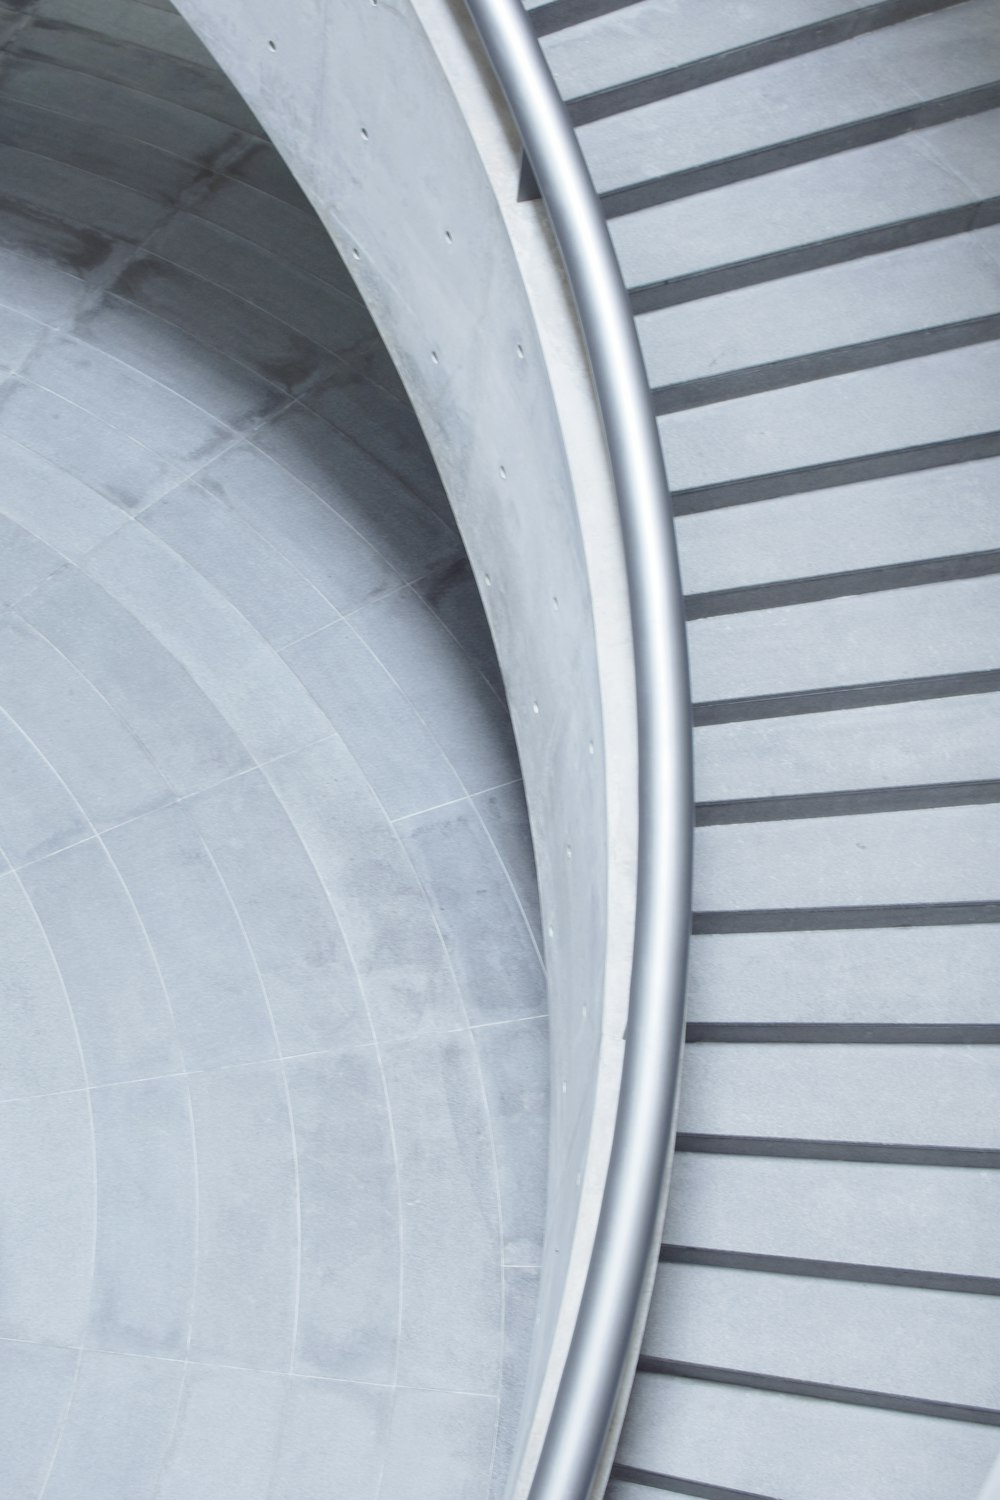 white metal spiral staircase during daytime